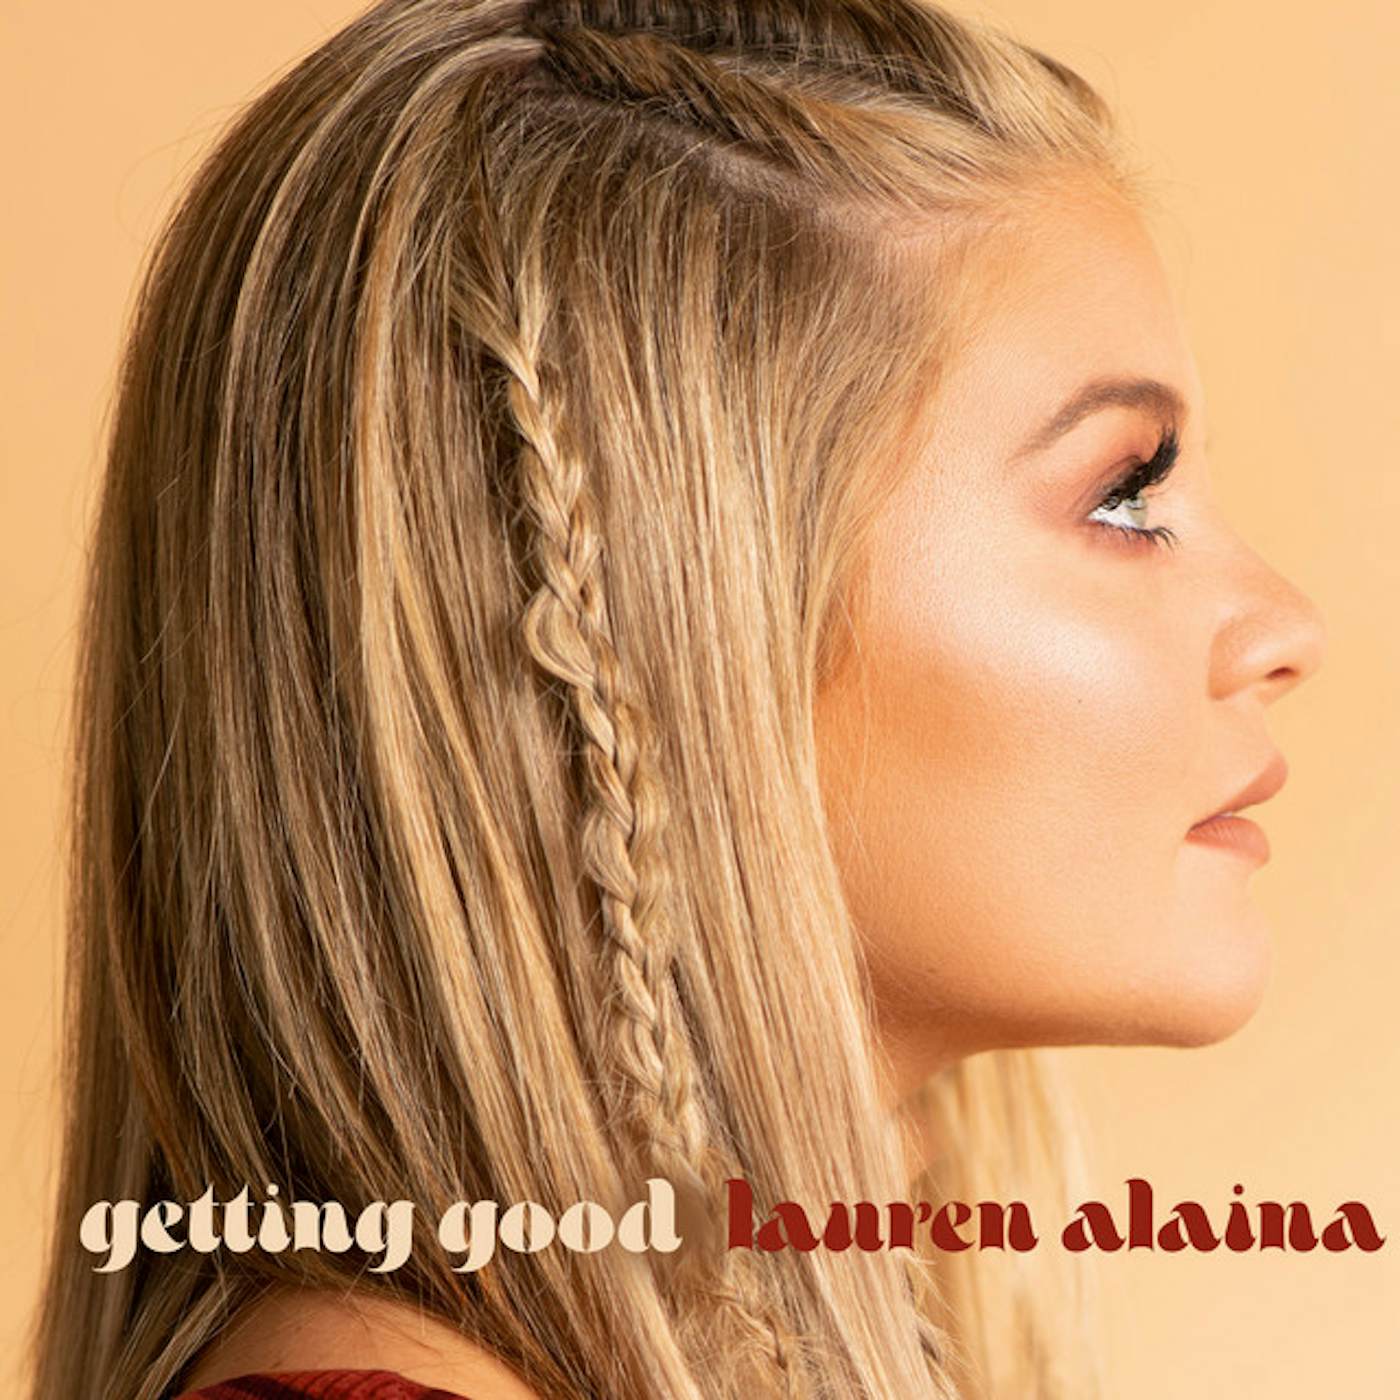 Lauren Alaina GETTING GOOD CD